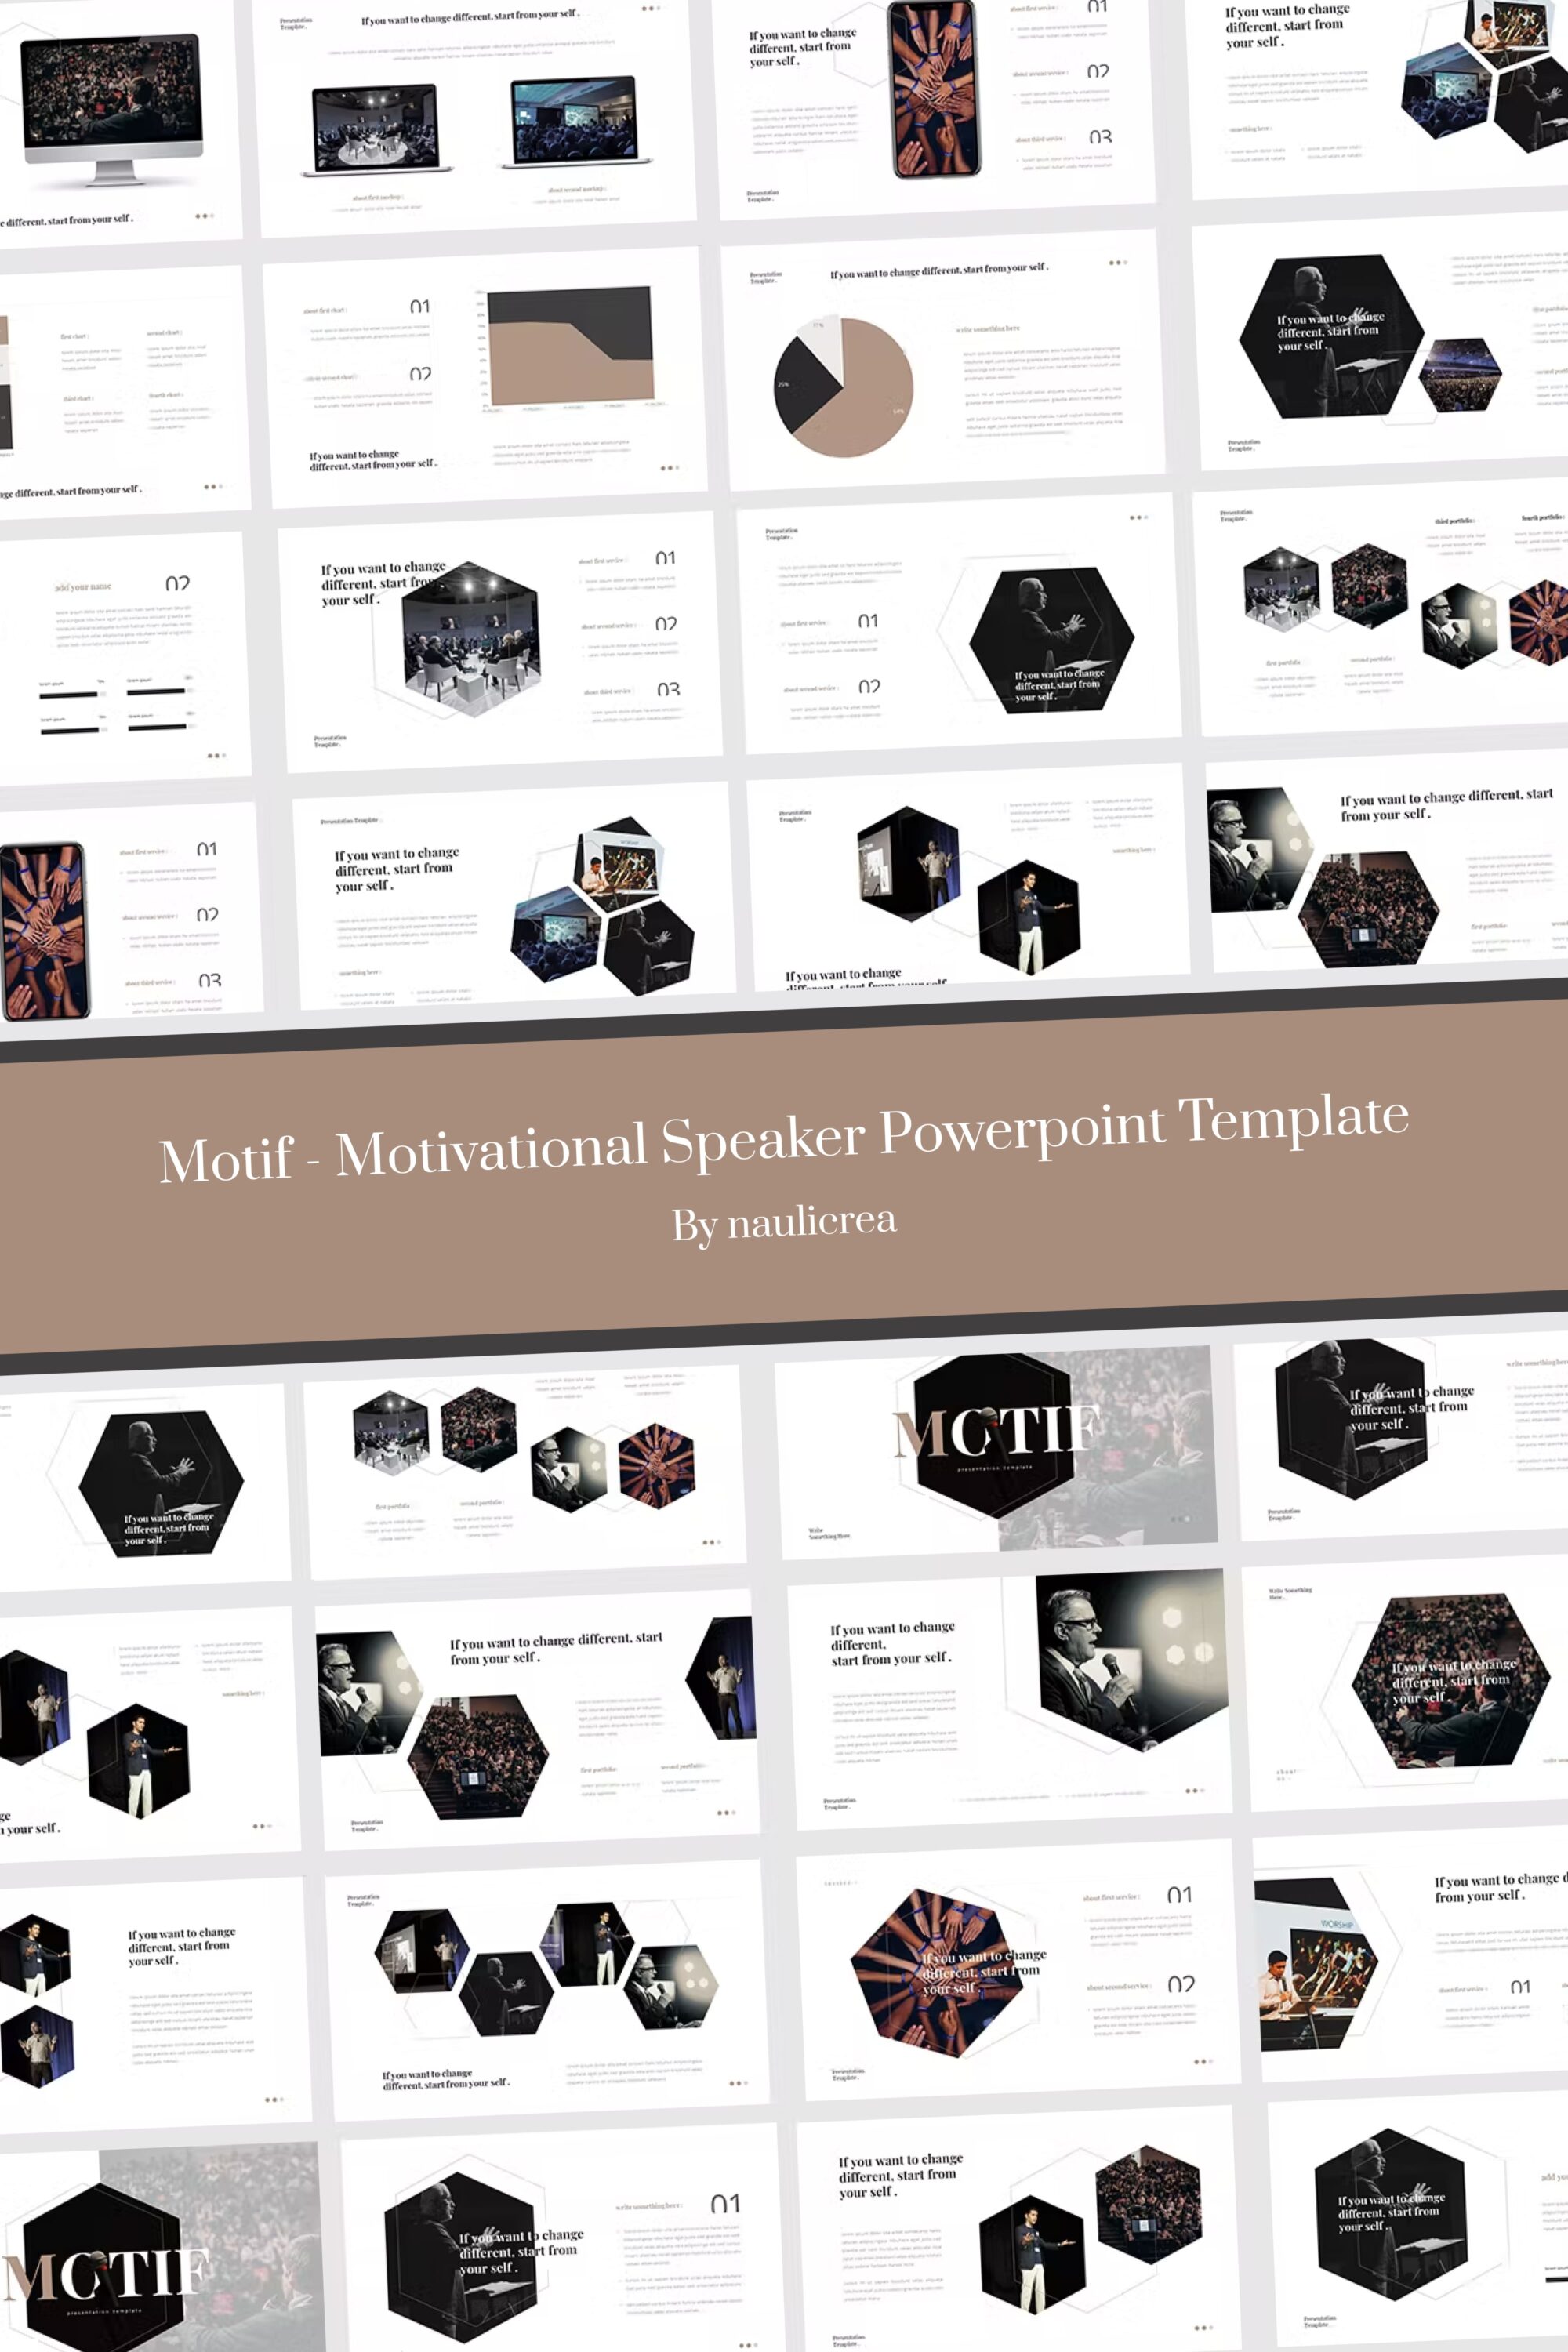 motif motivational speaker powerpoint template 03 848